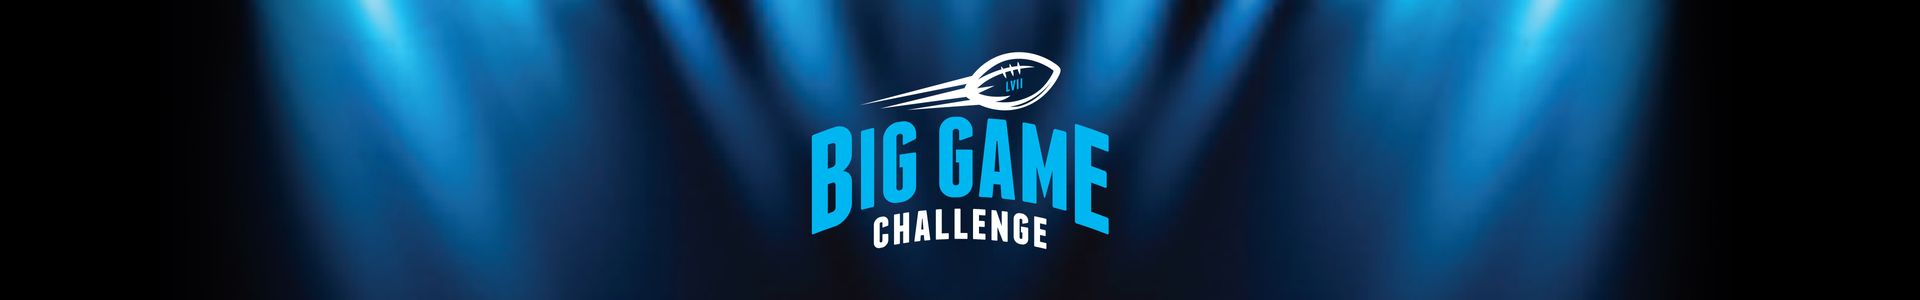 Big Game Challenge